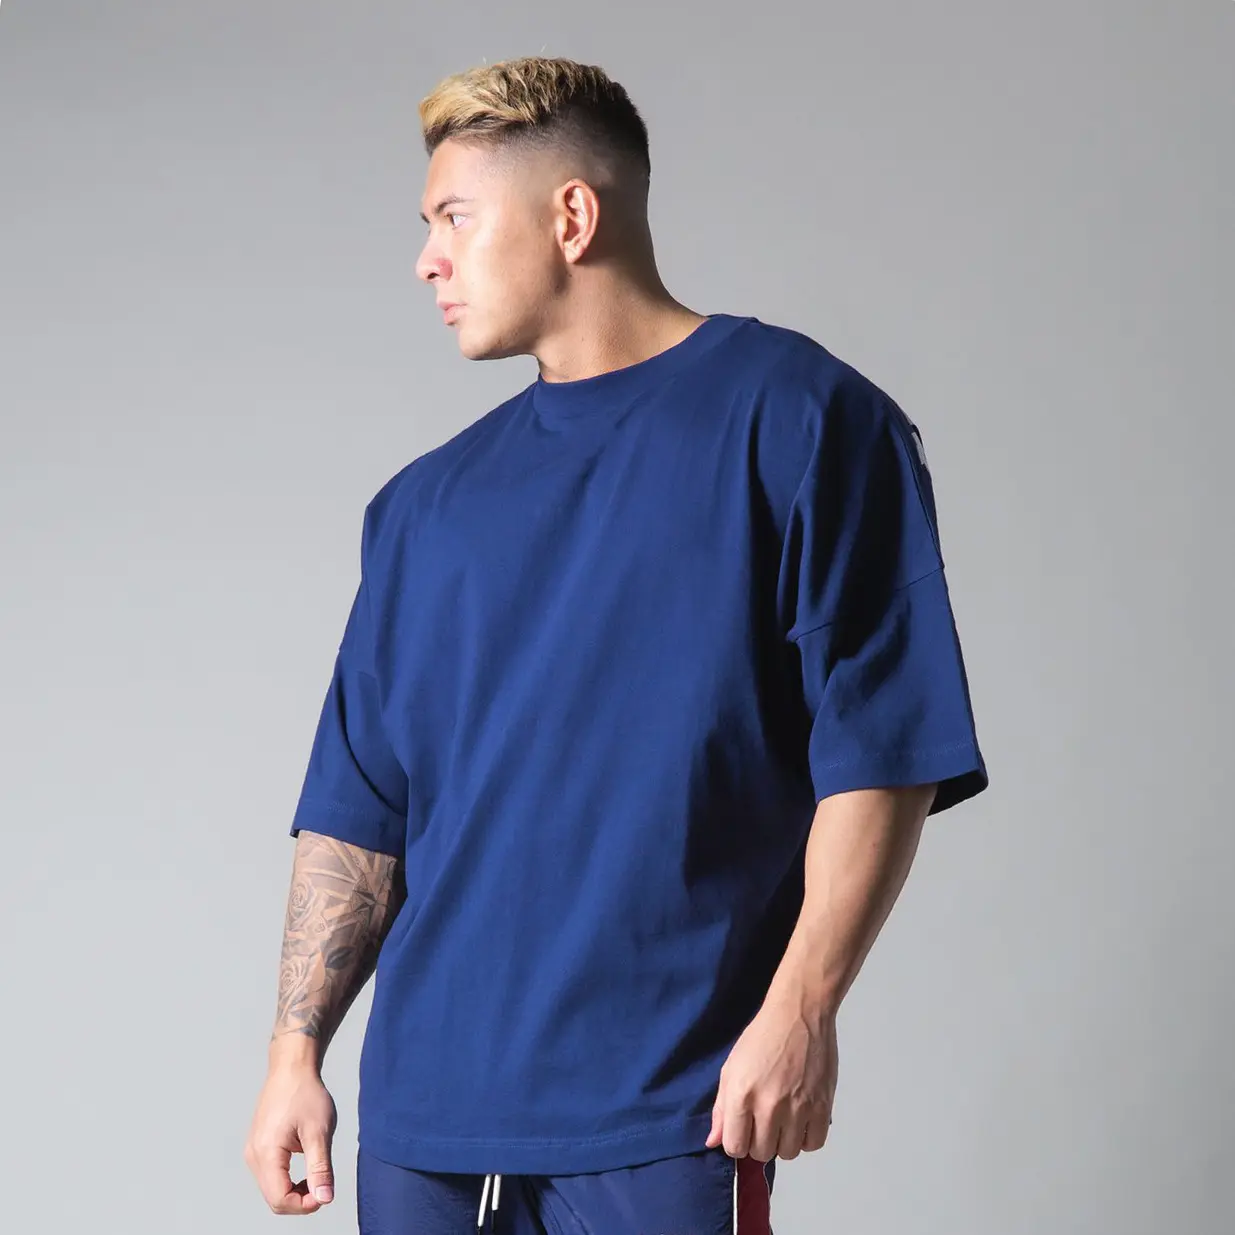 AOLA Casual Fitness Gym Men's Sports Solid Color Short Sleeve Men's T-shirts Plus Size Men's Clothes